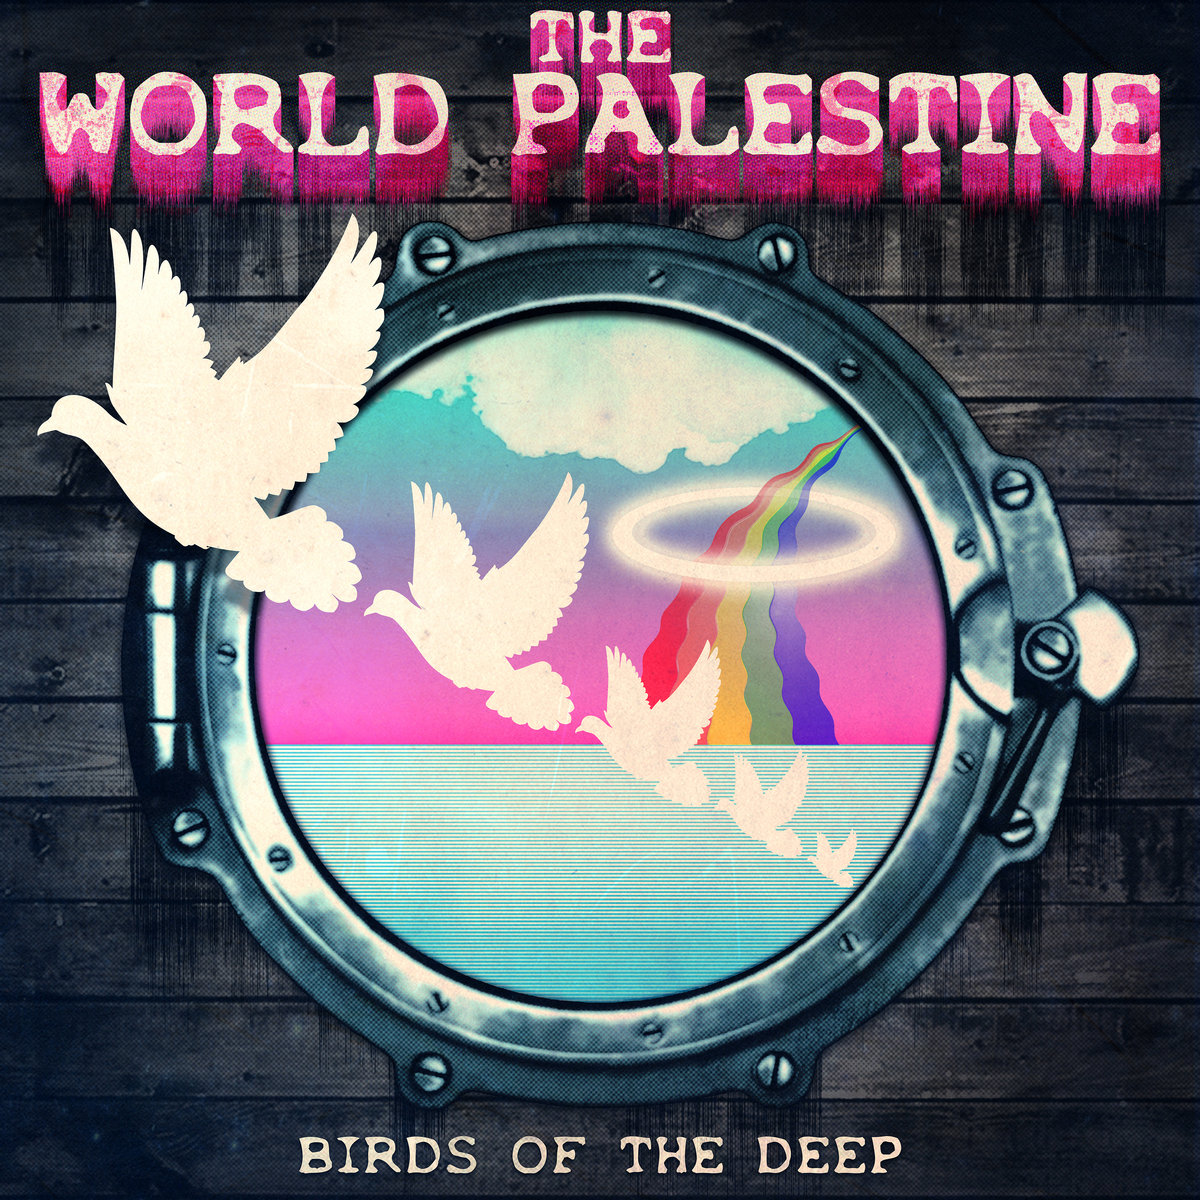 The World Palestine - Birds of the Deep